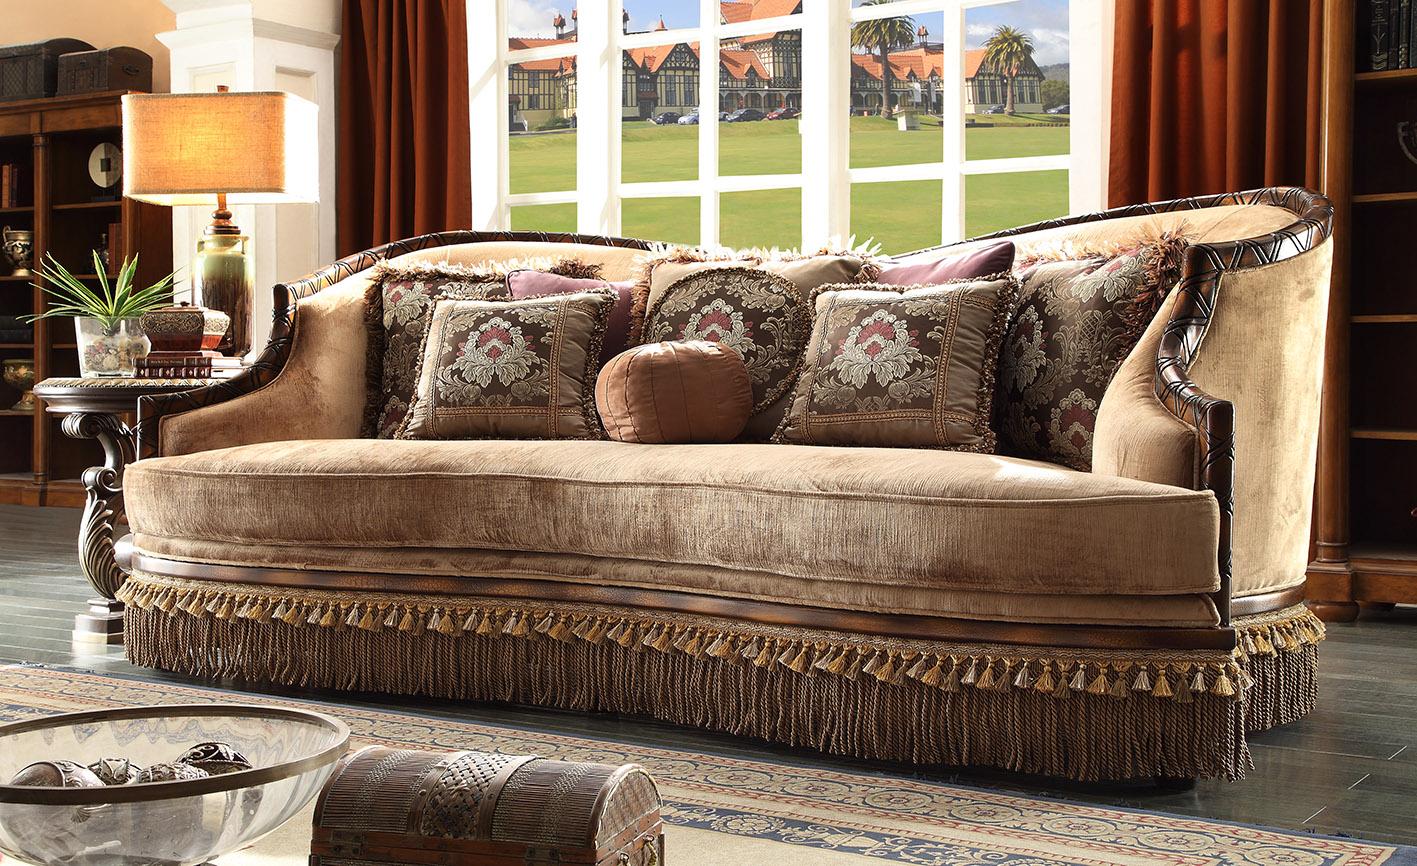 Traditional Sofa HD-1631 – SOFA HD-S1631 in Mahogany, Beige Fabric